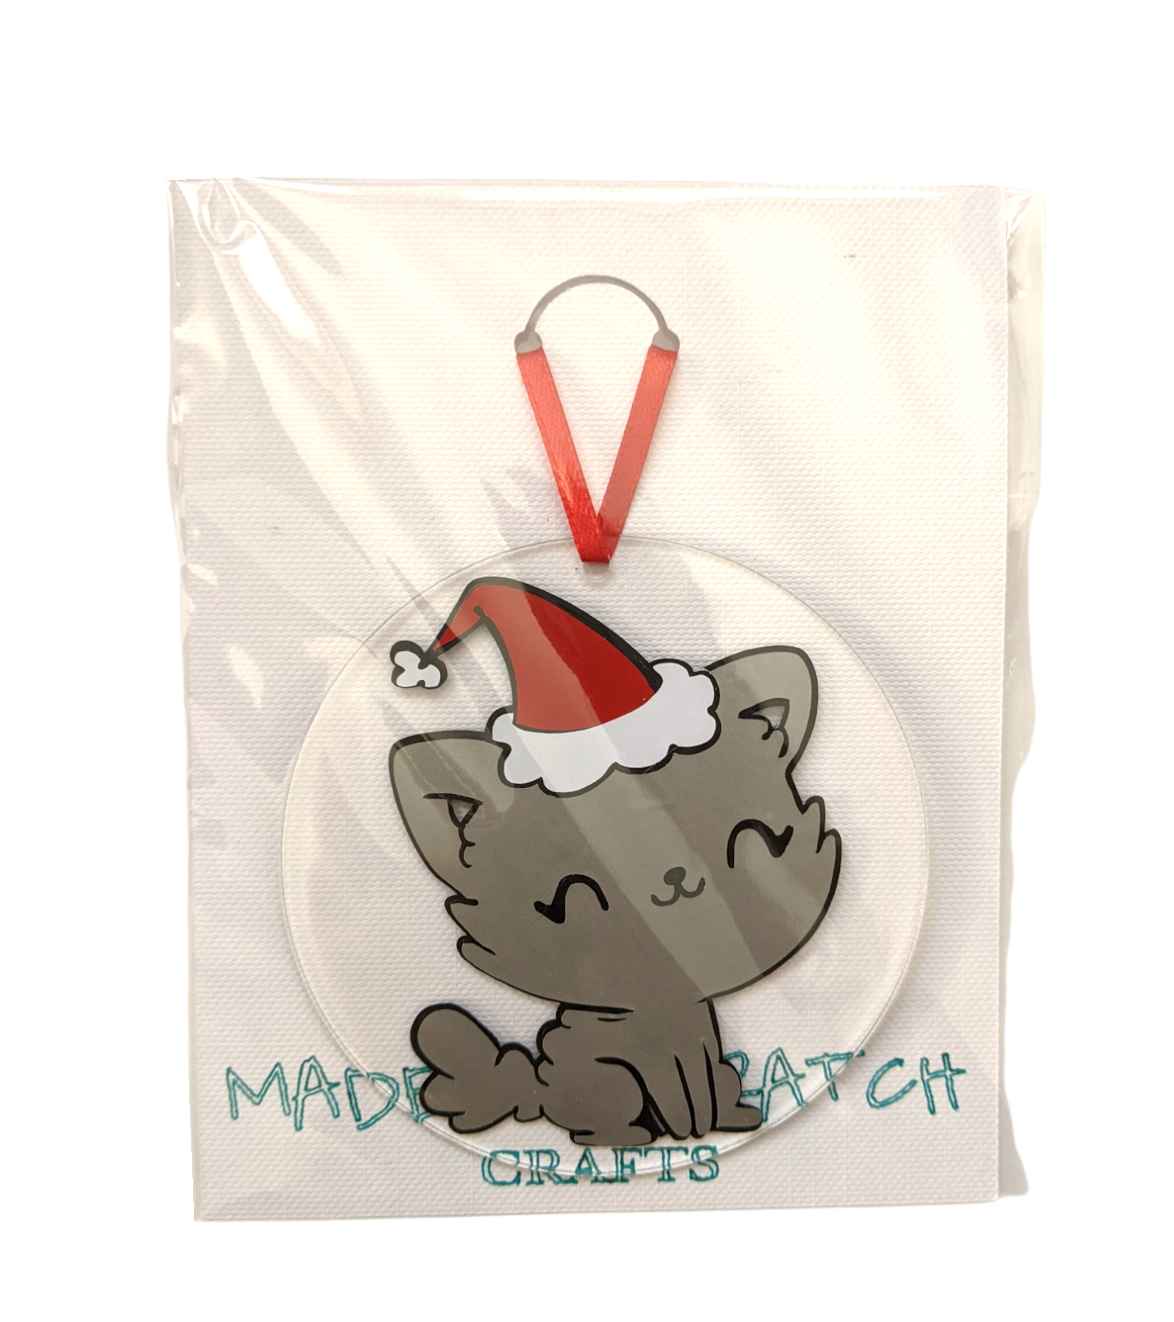 Round Acrylic Christmas Cat Ornament